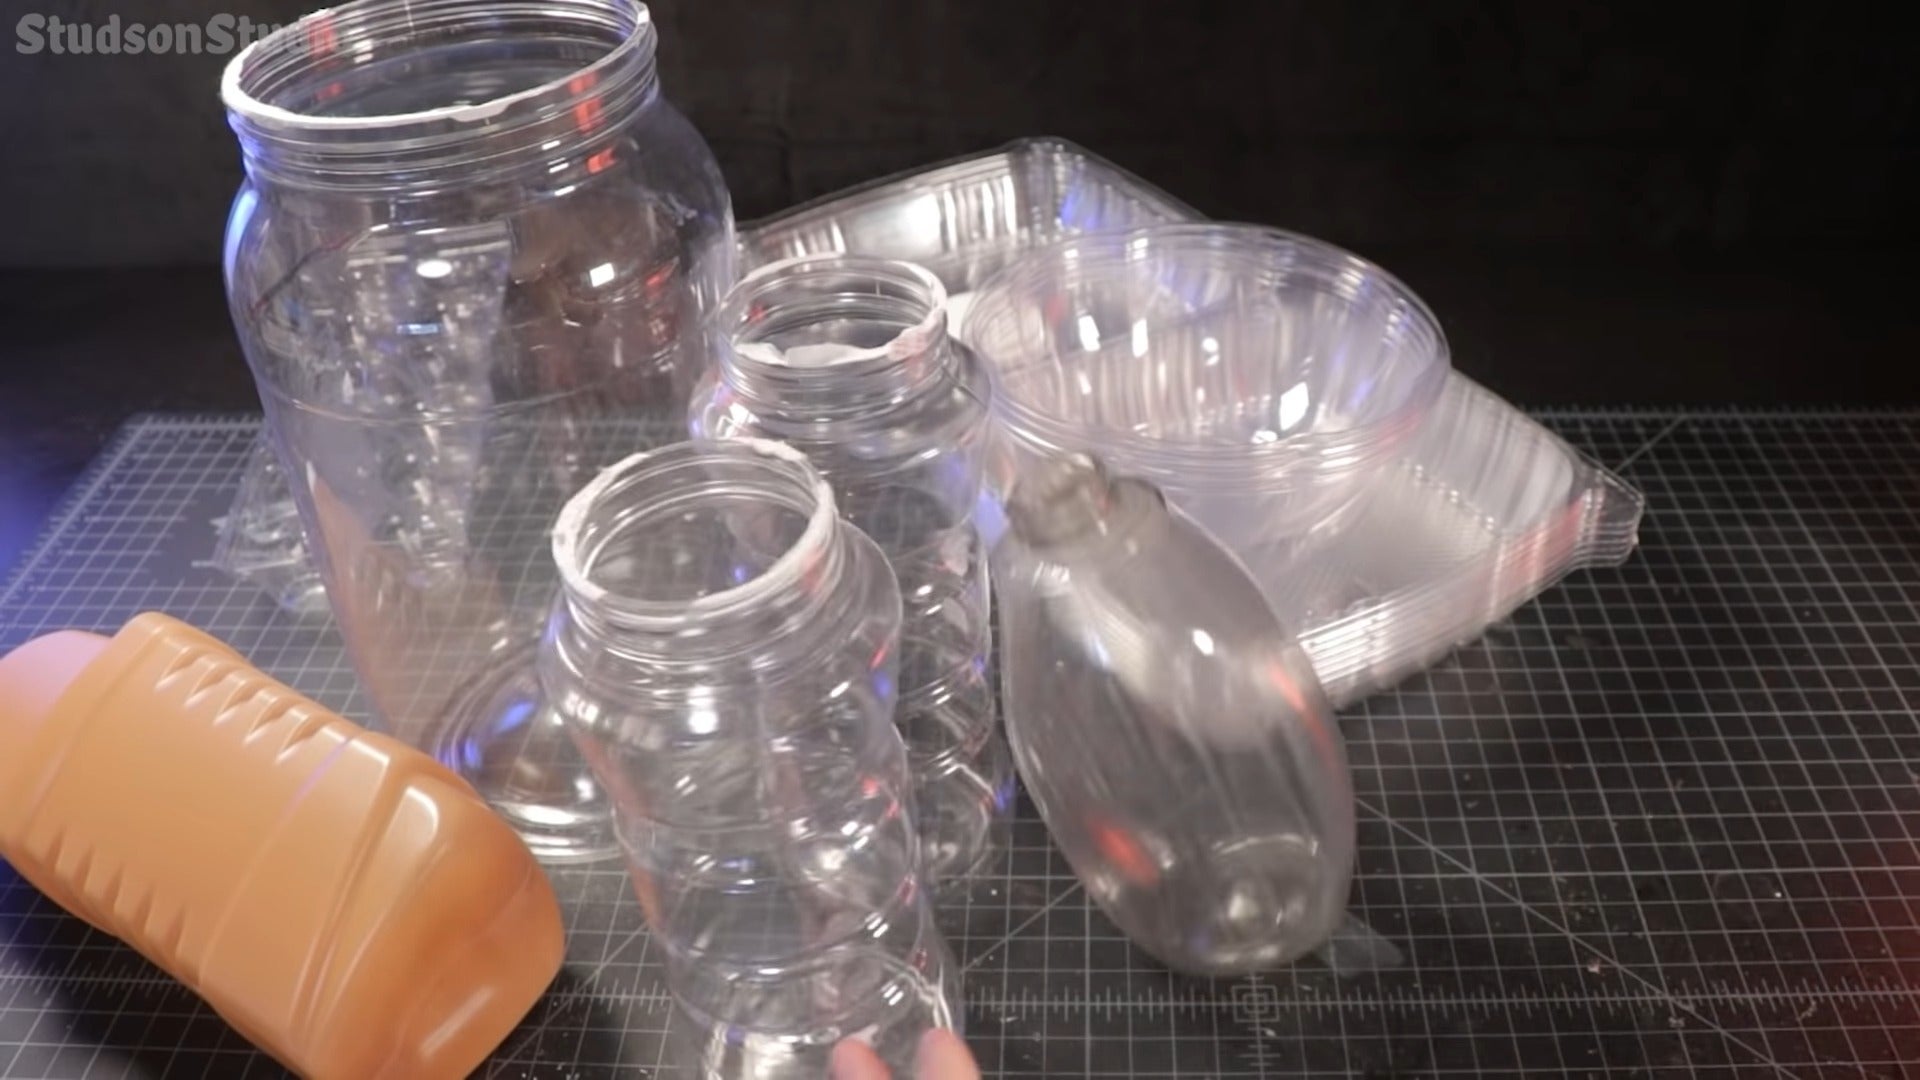 Plastic trash was repurposed for the Howl's Moving Castle model. (Screenshot: Studson Studio/YouTube)